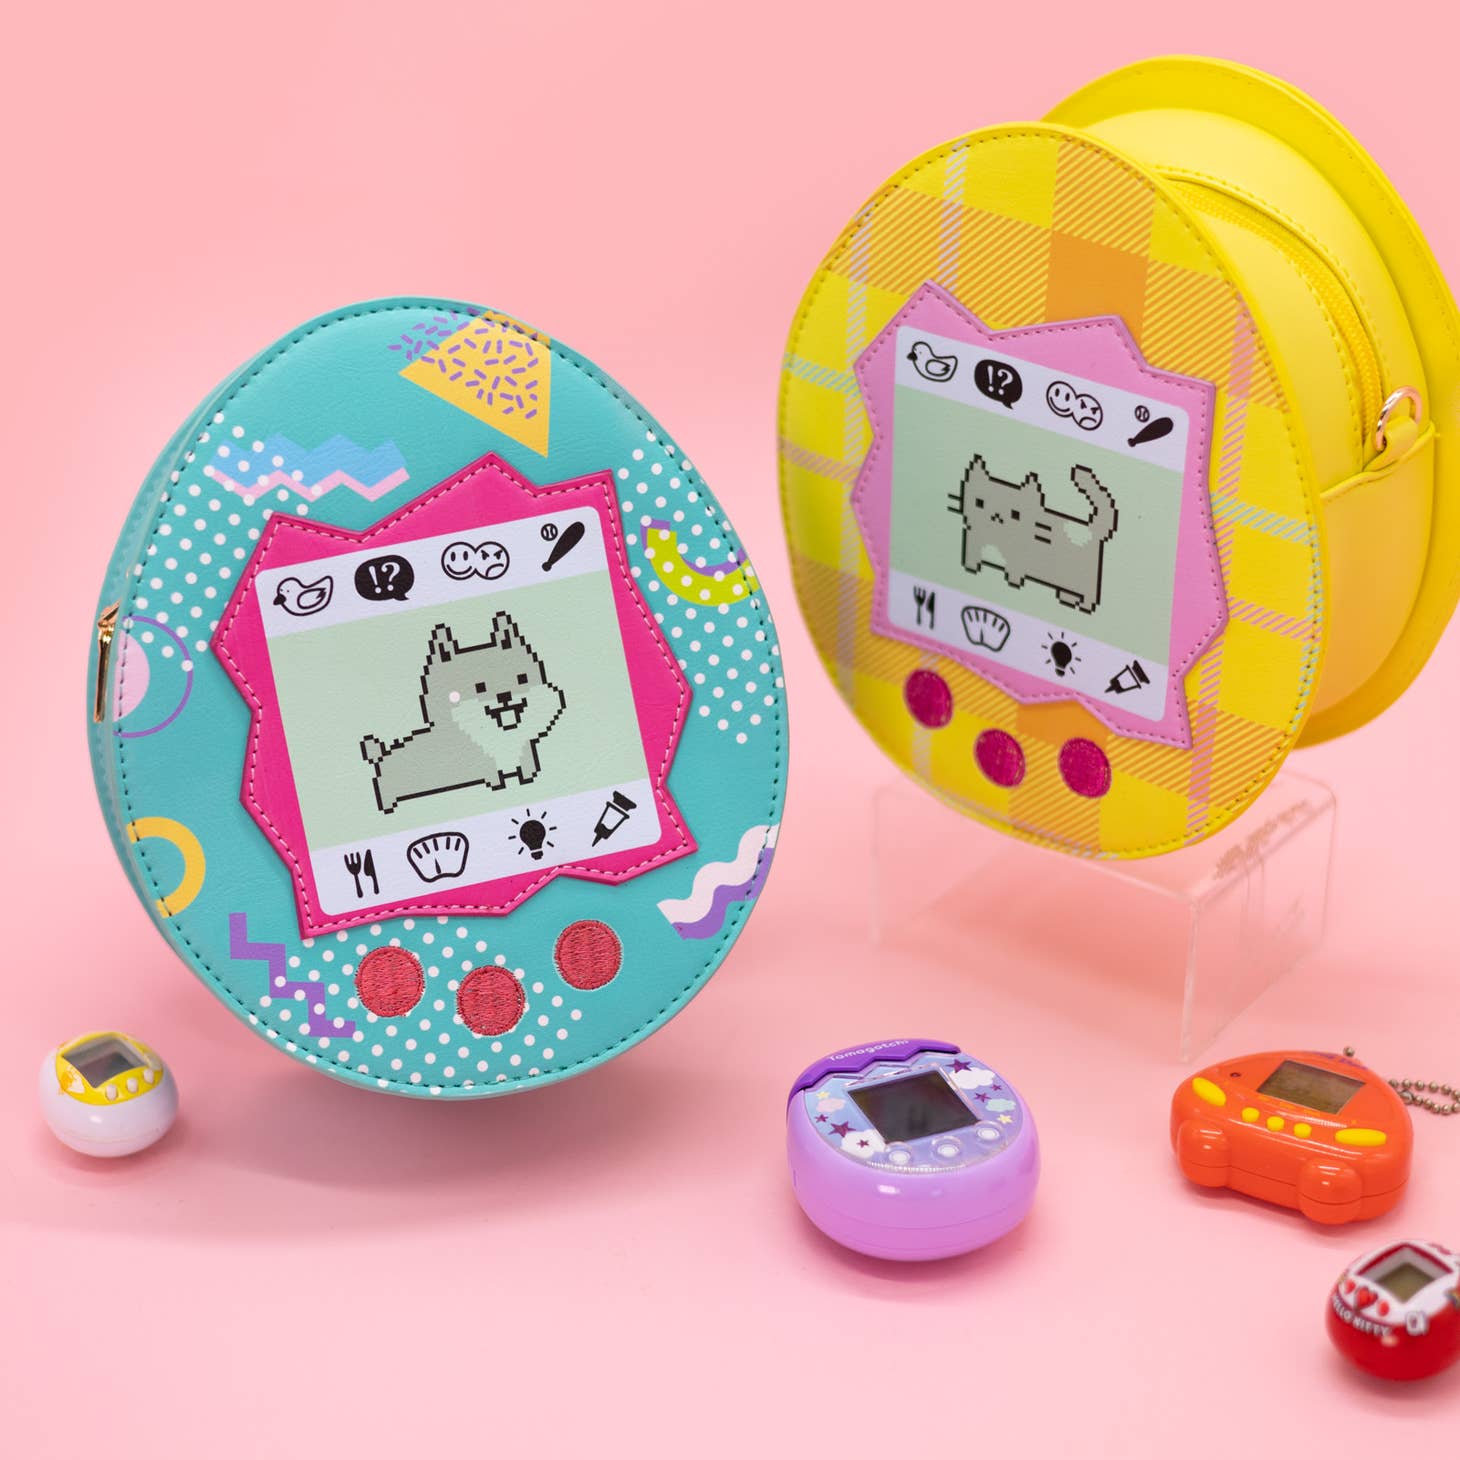 Bewaltz Virtual Pet Friend Handbags - Cats Or Dogs Kawaii Gifts